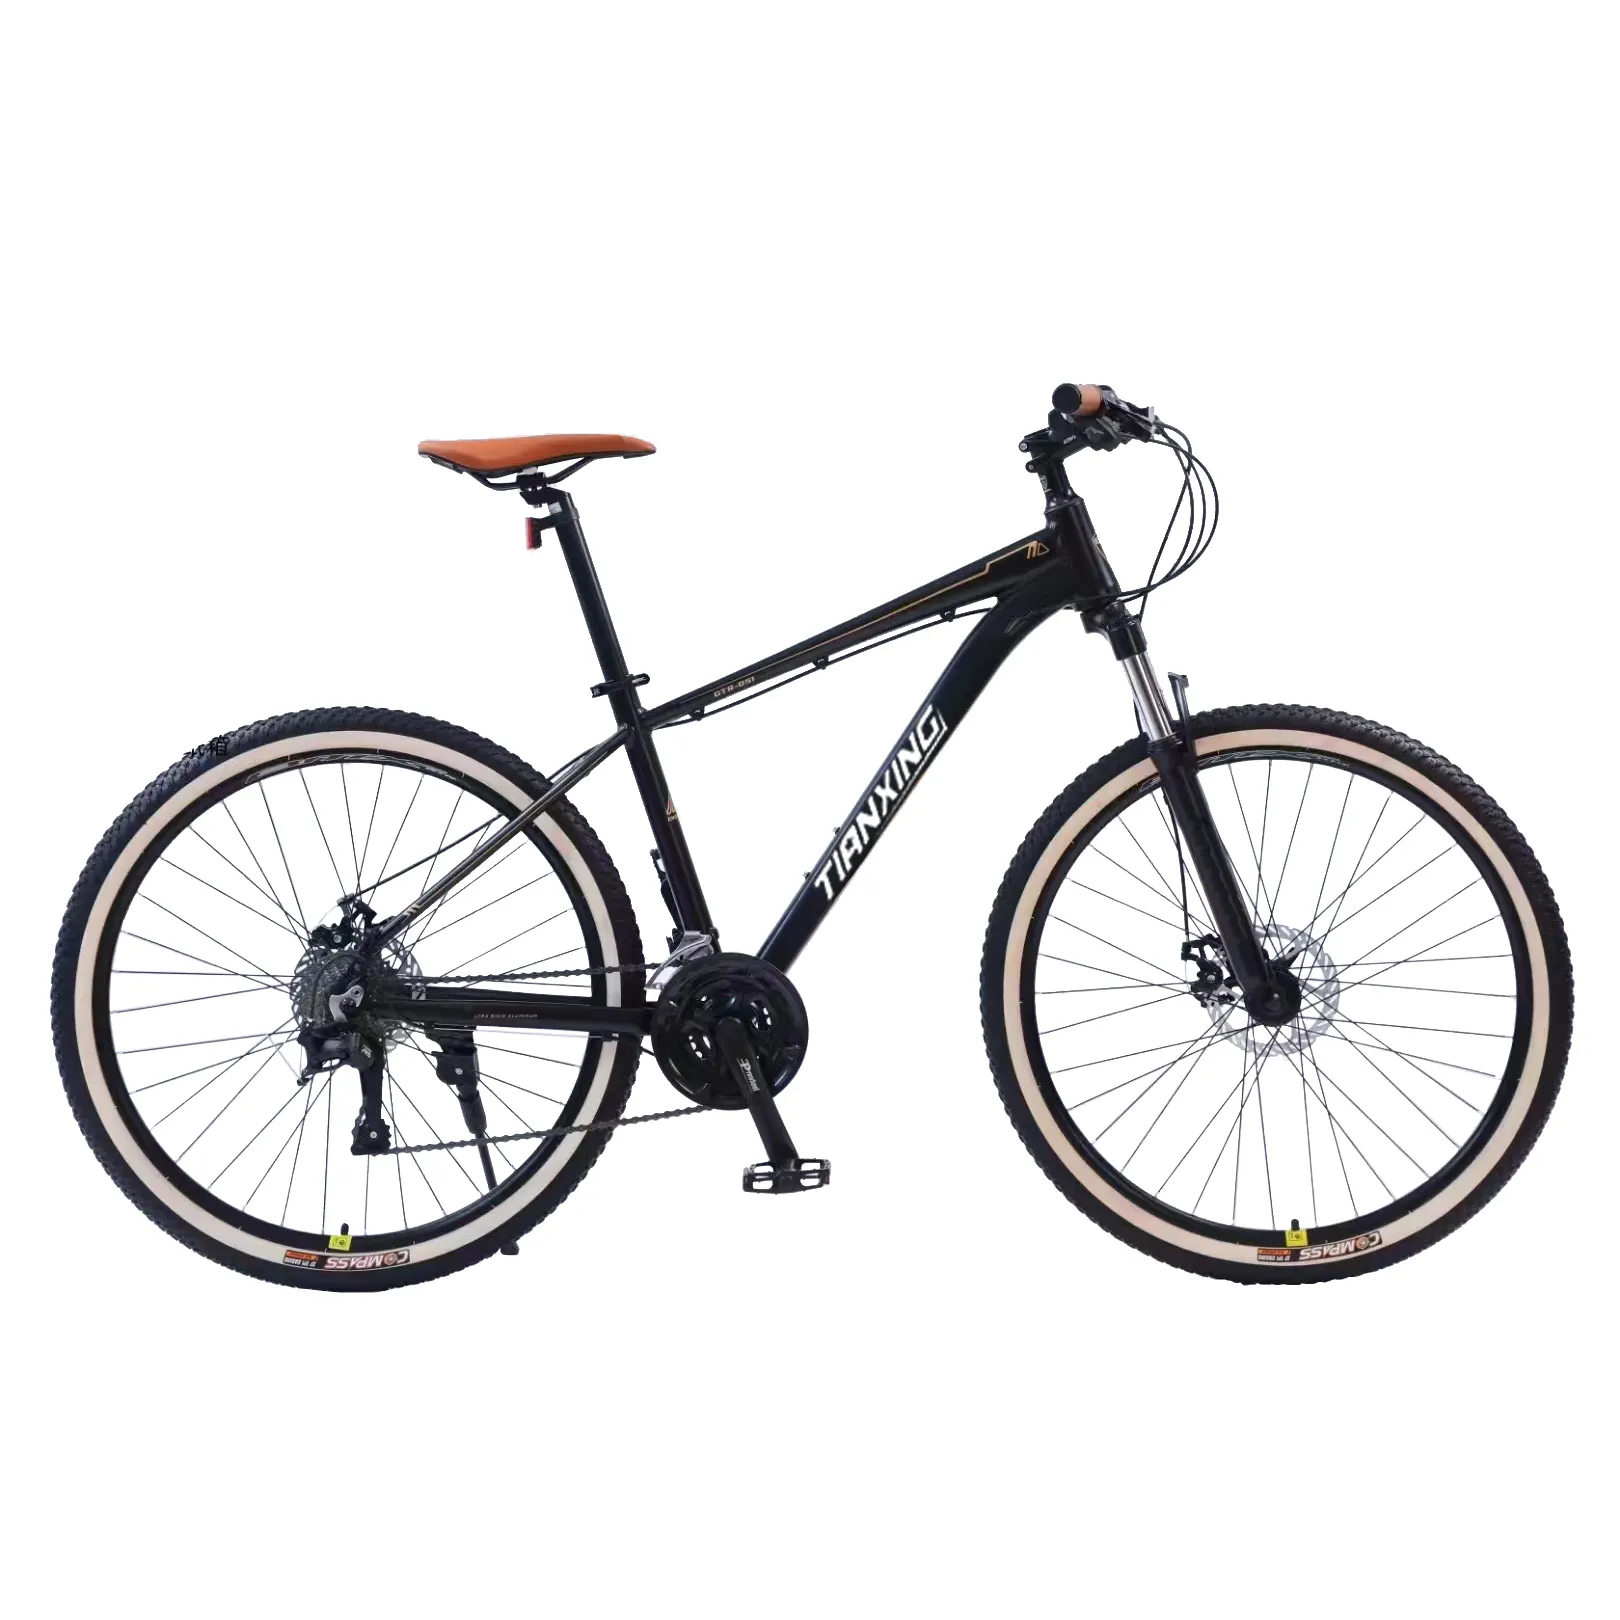 Preço de fábrica de entrega rápida personalizado bicicleta esportiva barata híbrida/mtb bicicleta/bicicleta de montanha